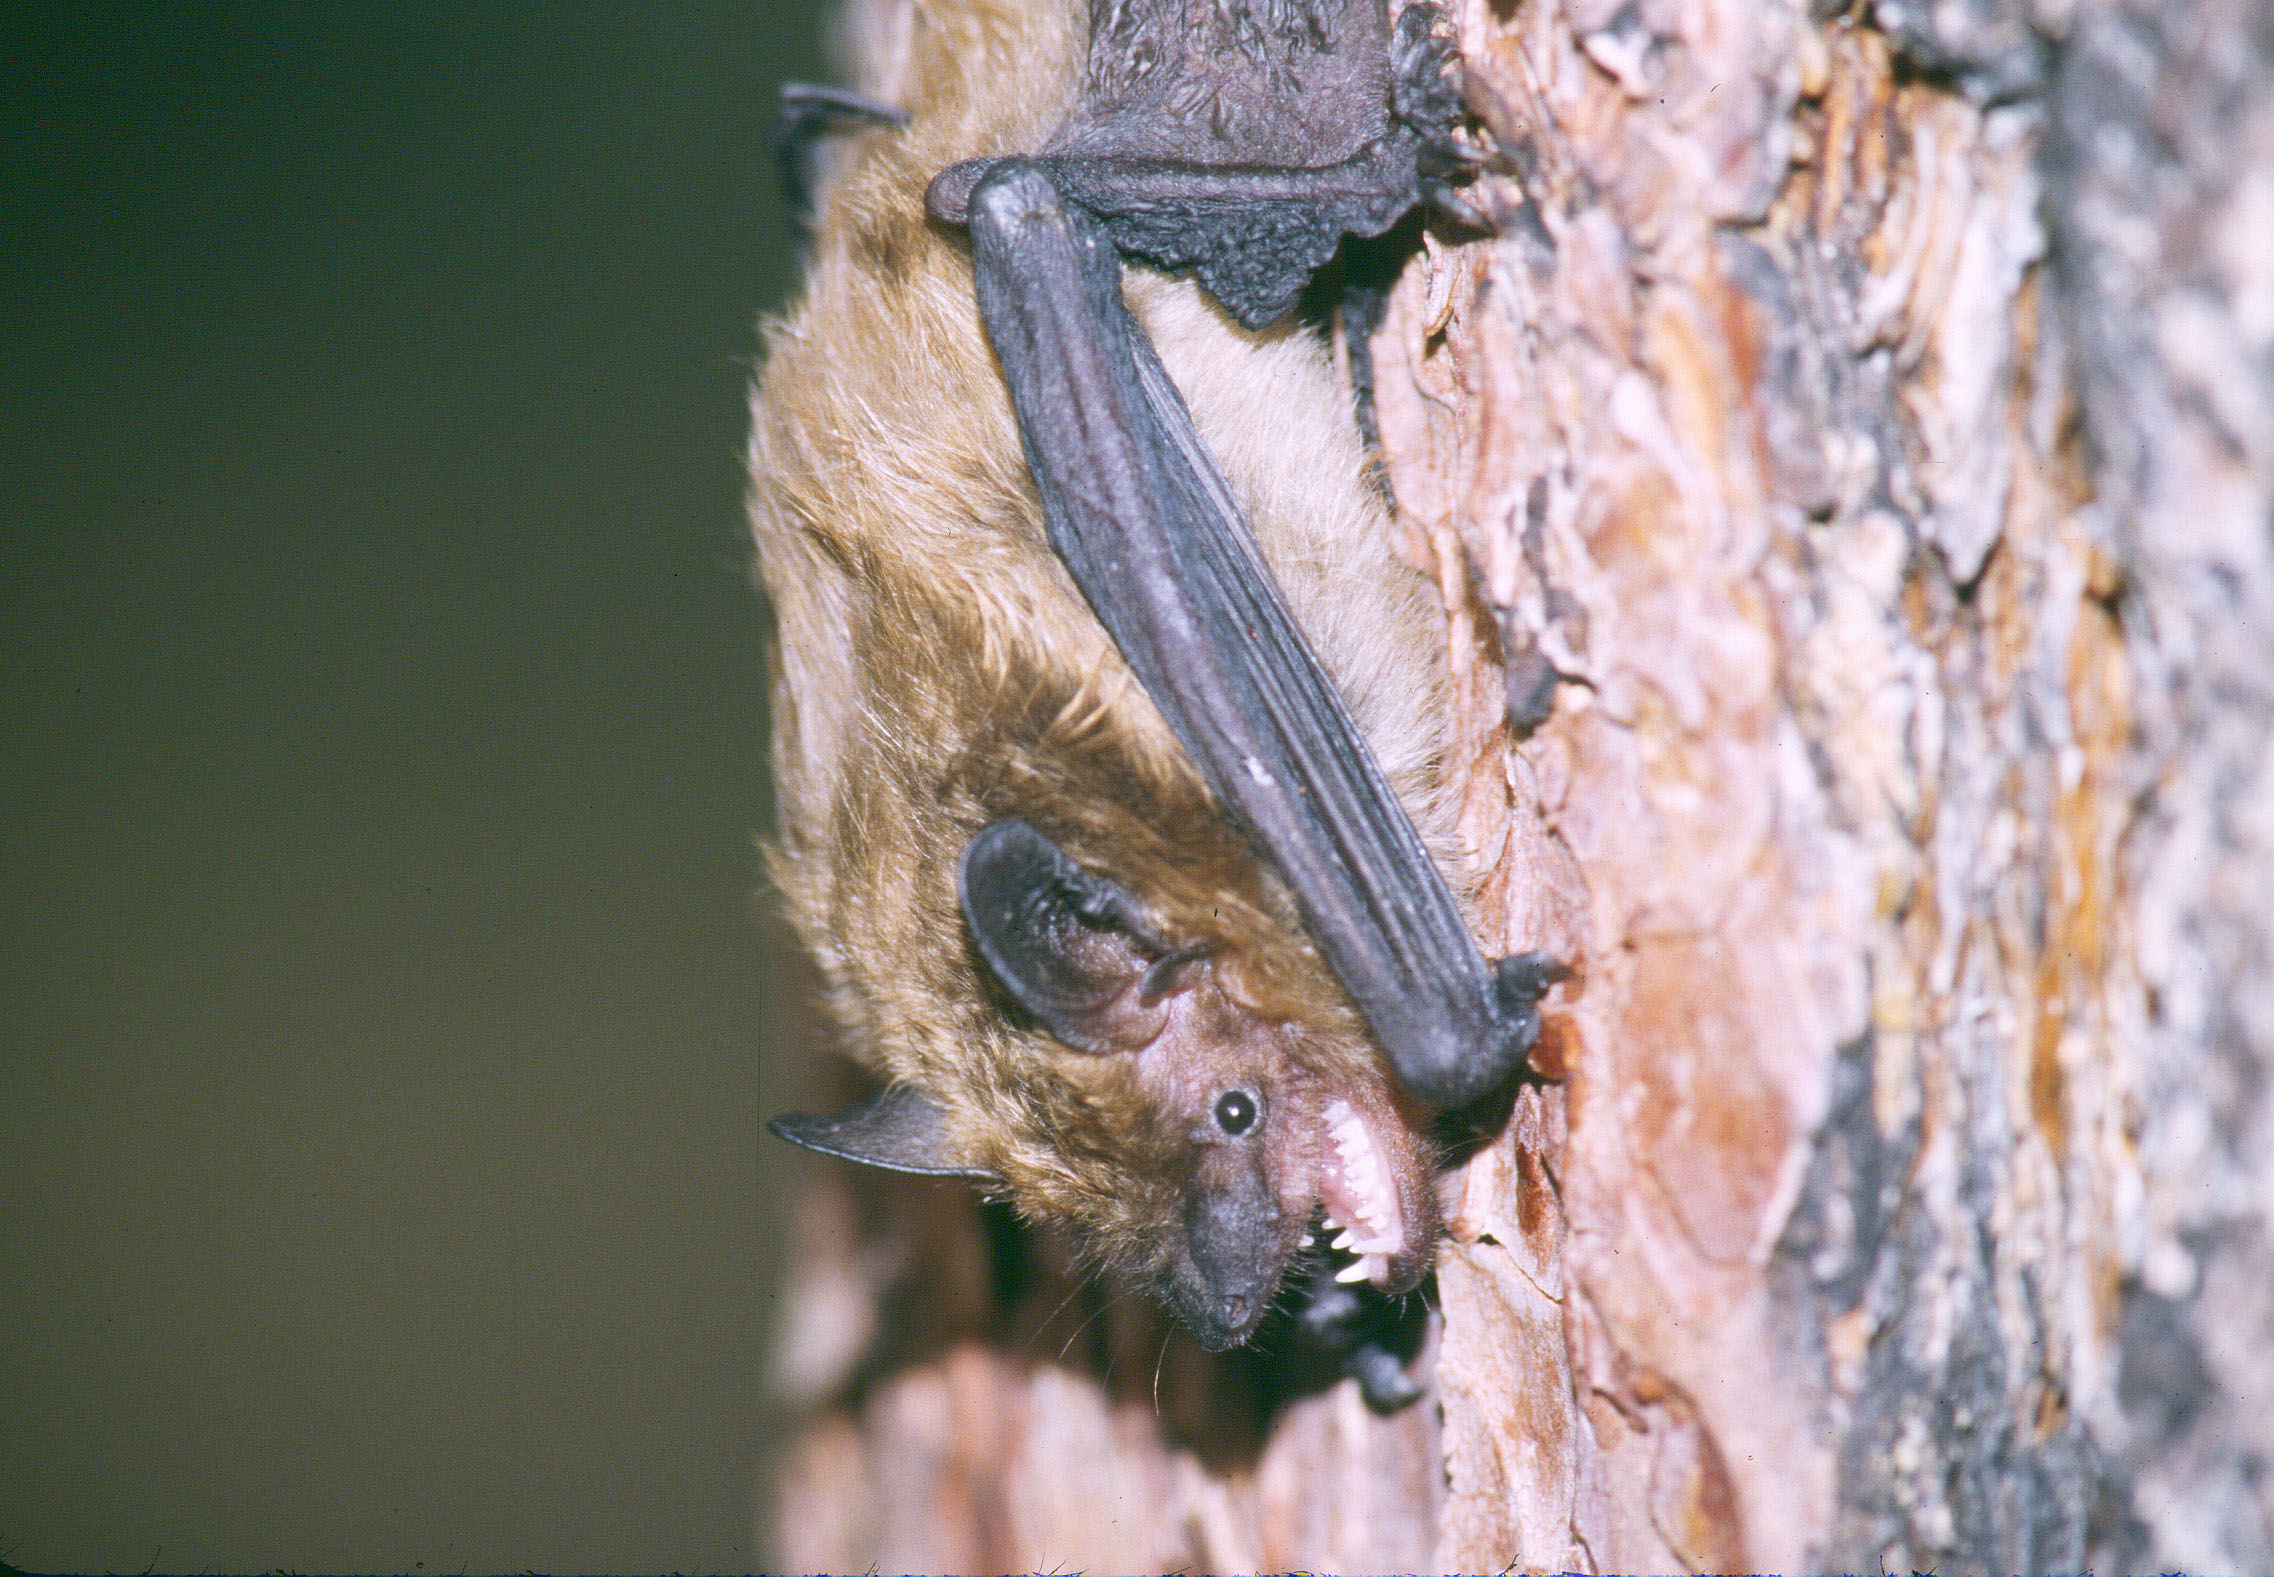 Big brown bat. Photo by Keith Geluso.